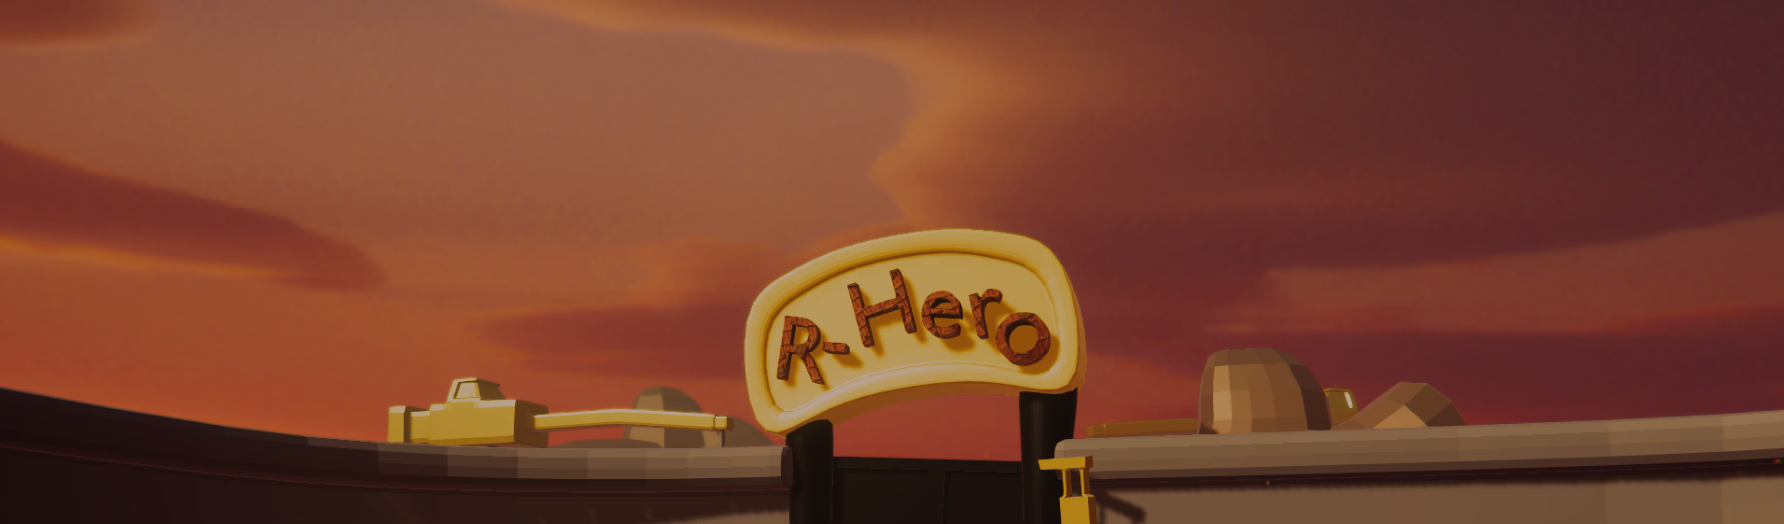 R-Hero